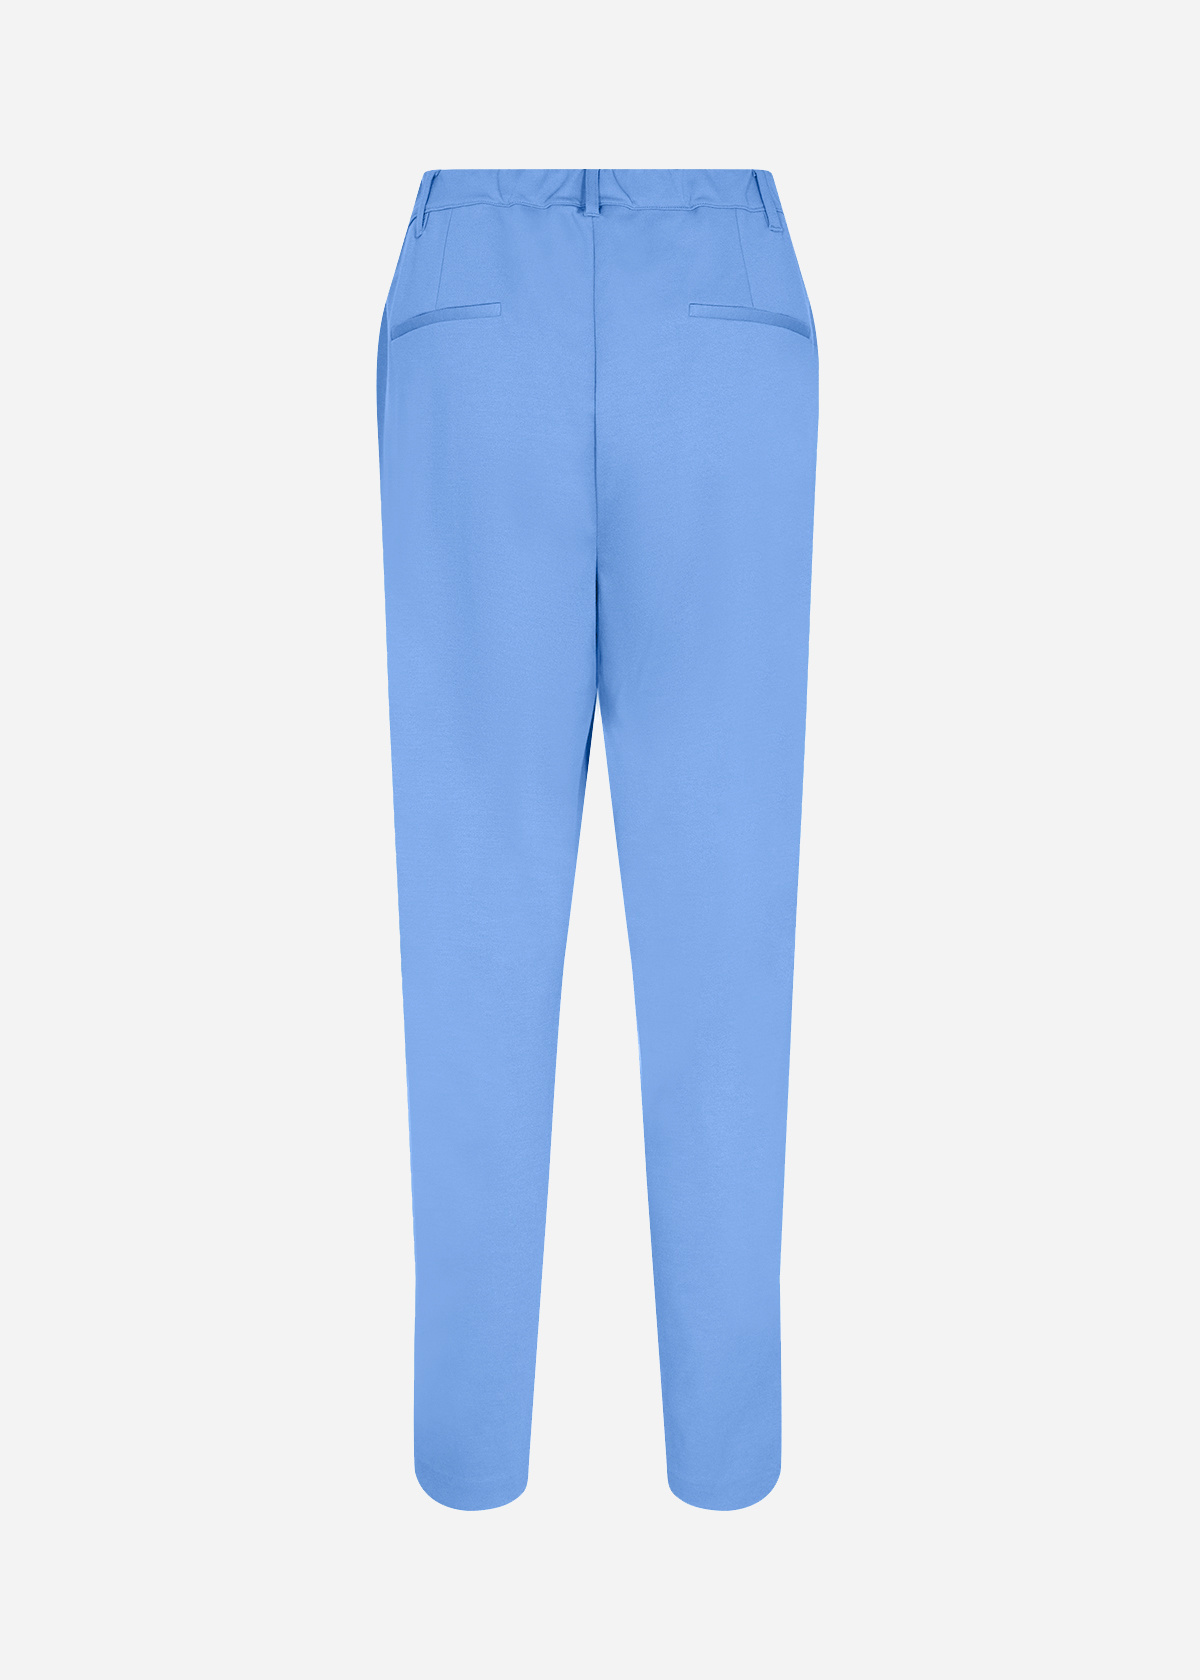 Hanas Pants Women's Casual Fashion High Waist Solid Color Washed Denim  Straight Trousers Royal Blue/M - Walmart.com